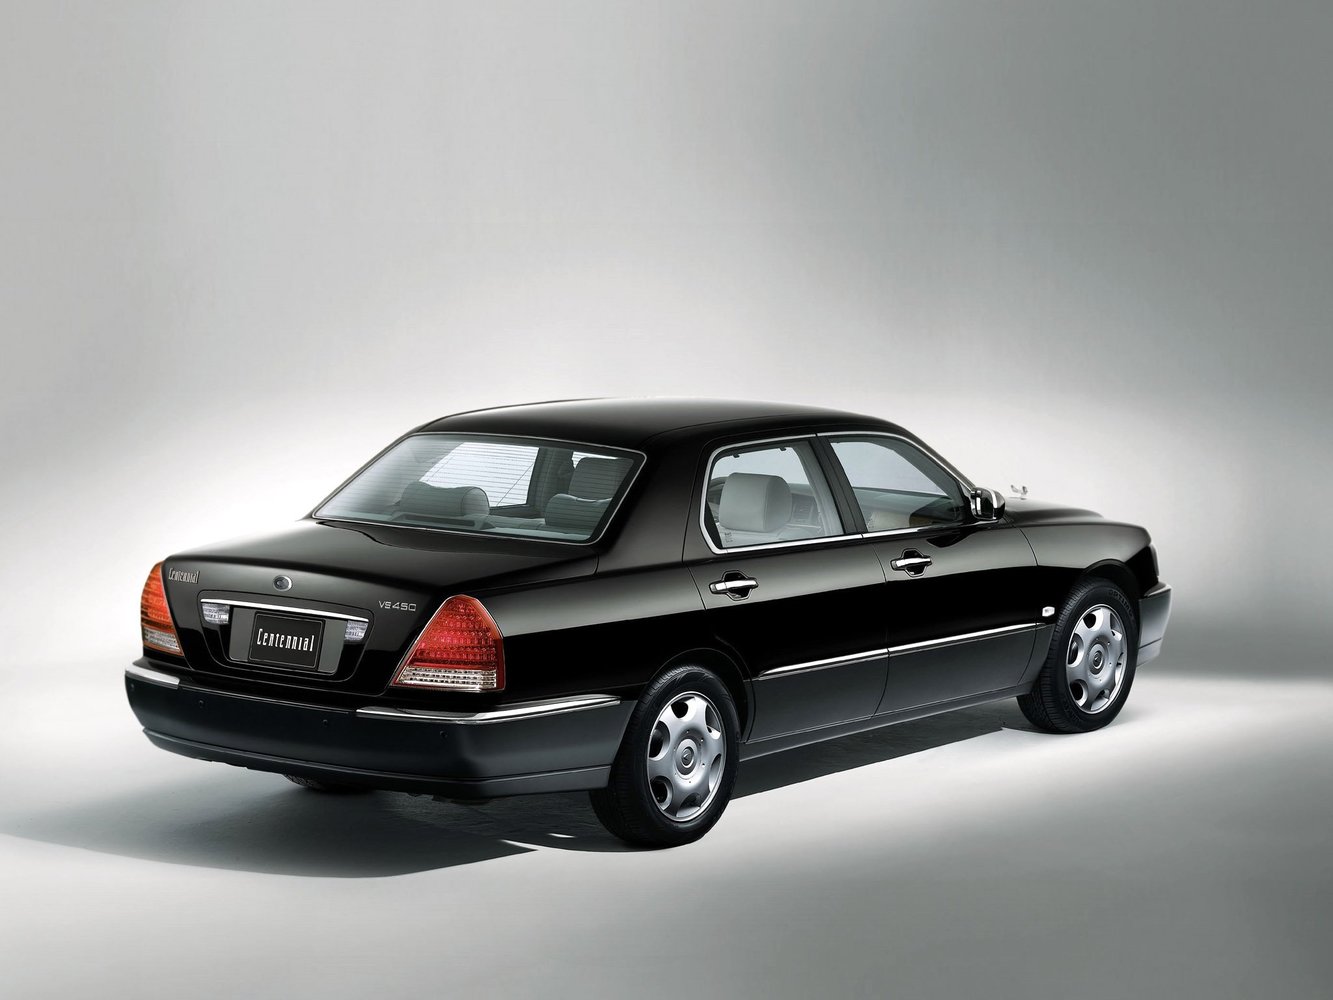 седан Hyundai Centennial 1999 - 2008г выпуска модификация 4.5 AT (270 л.с.)